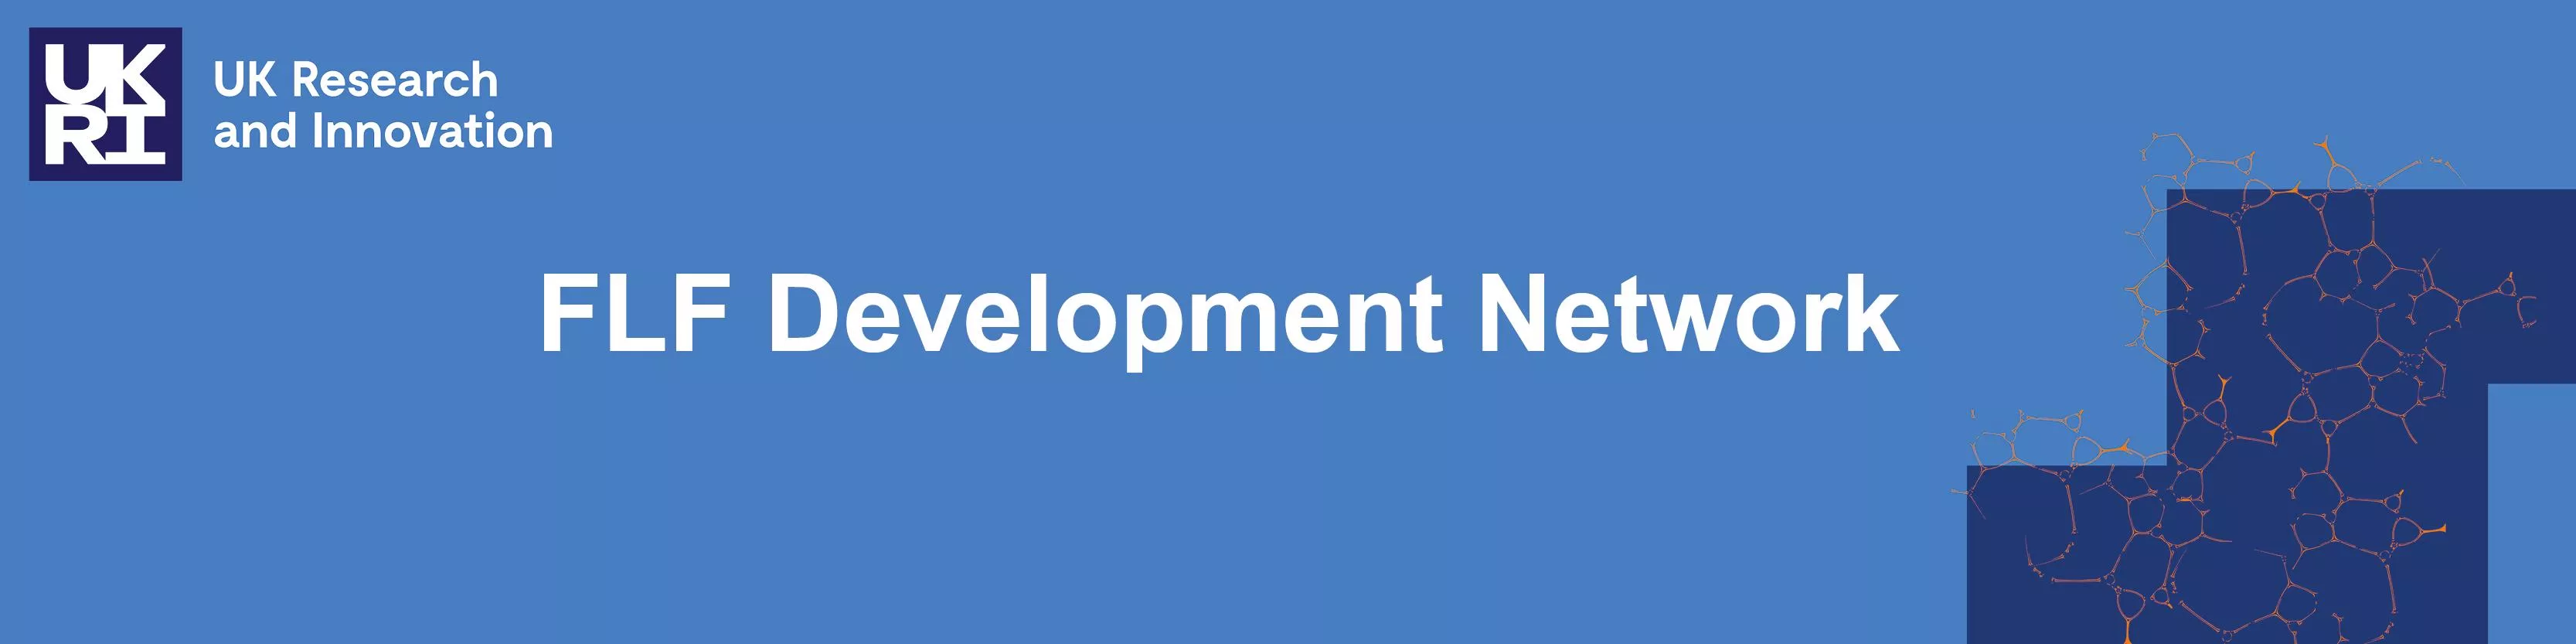 UKRI Development Network logo